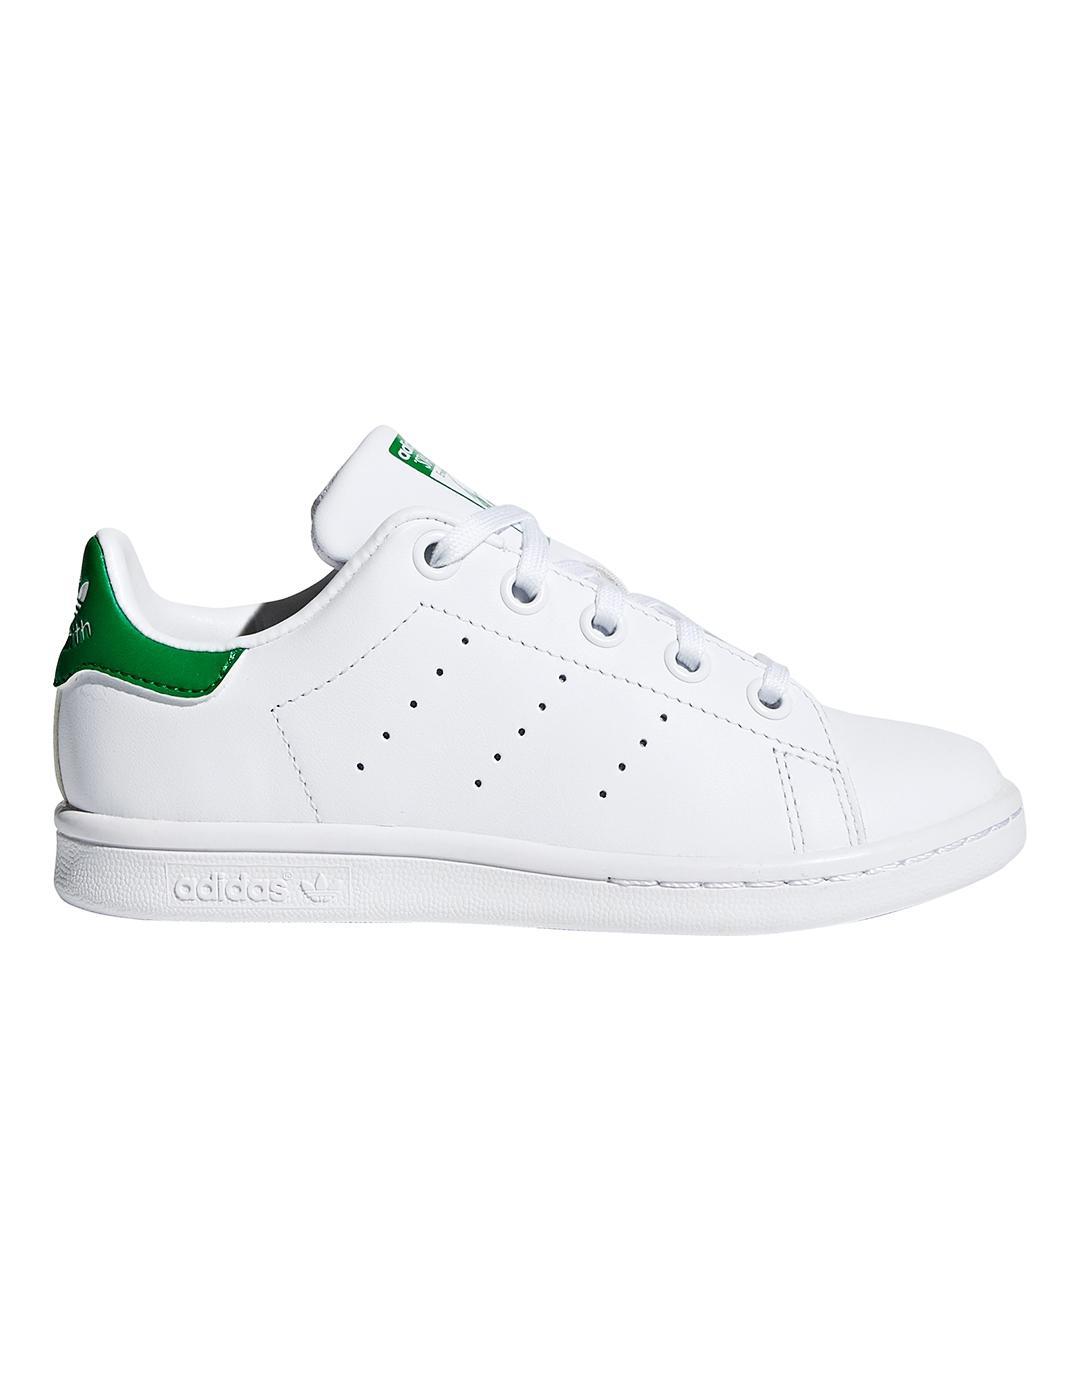 Zapatillas deNiño Adidas Stan Smith Blanco/Verde